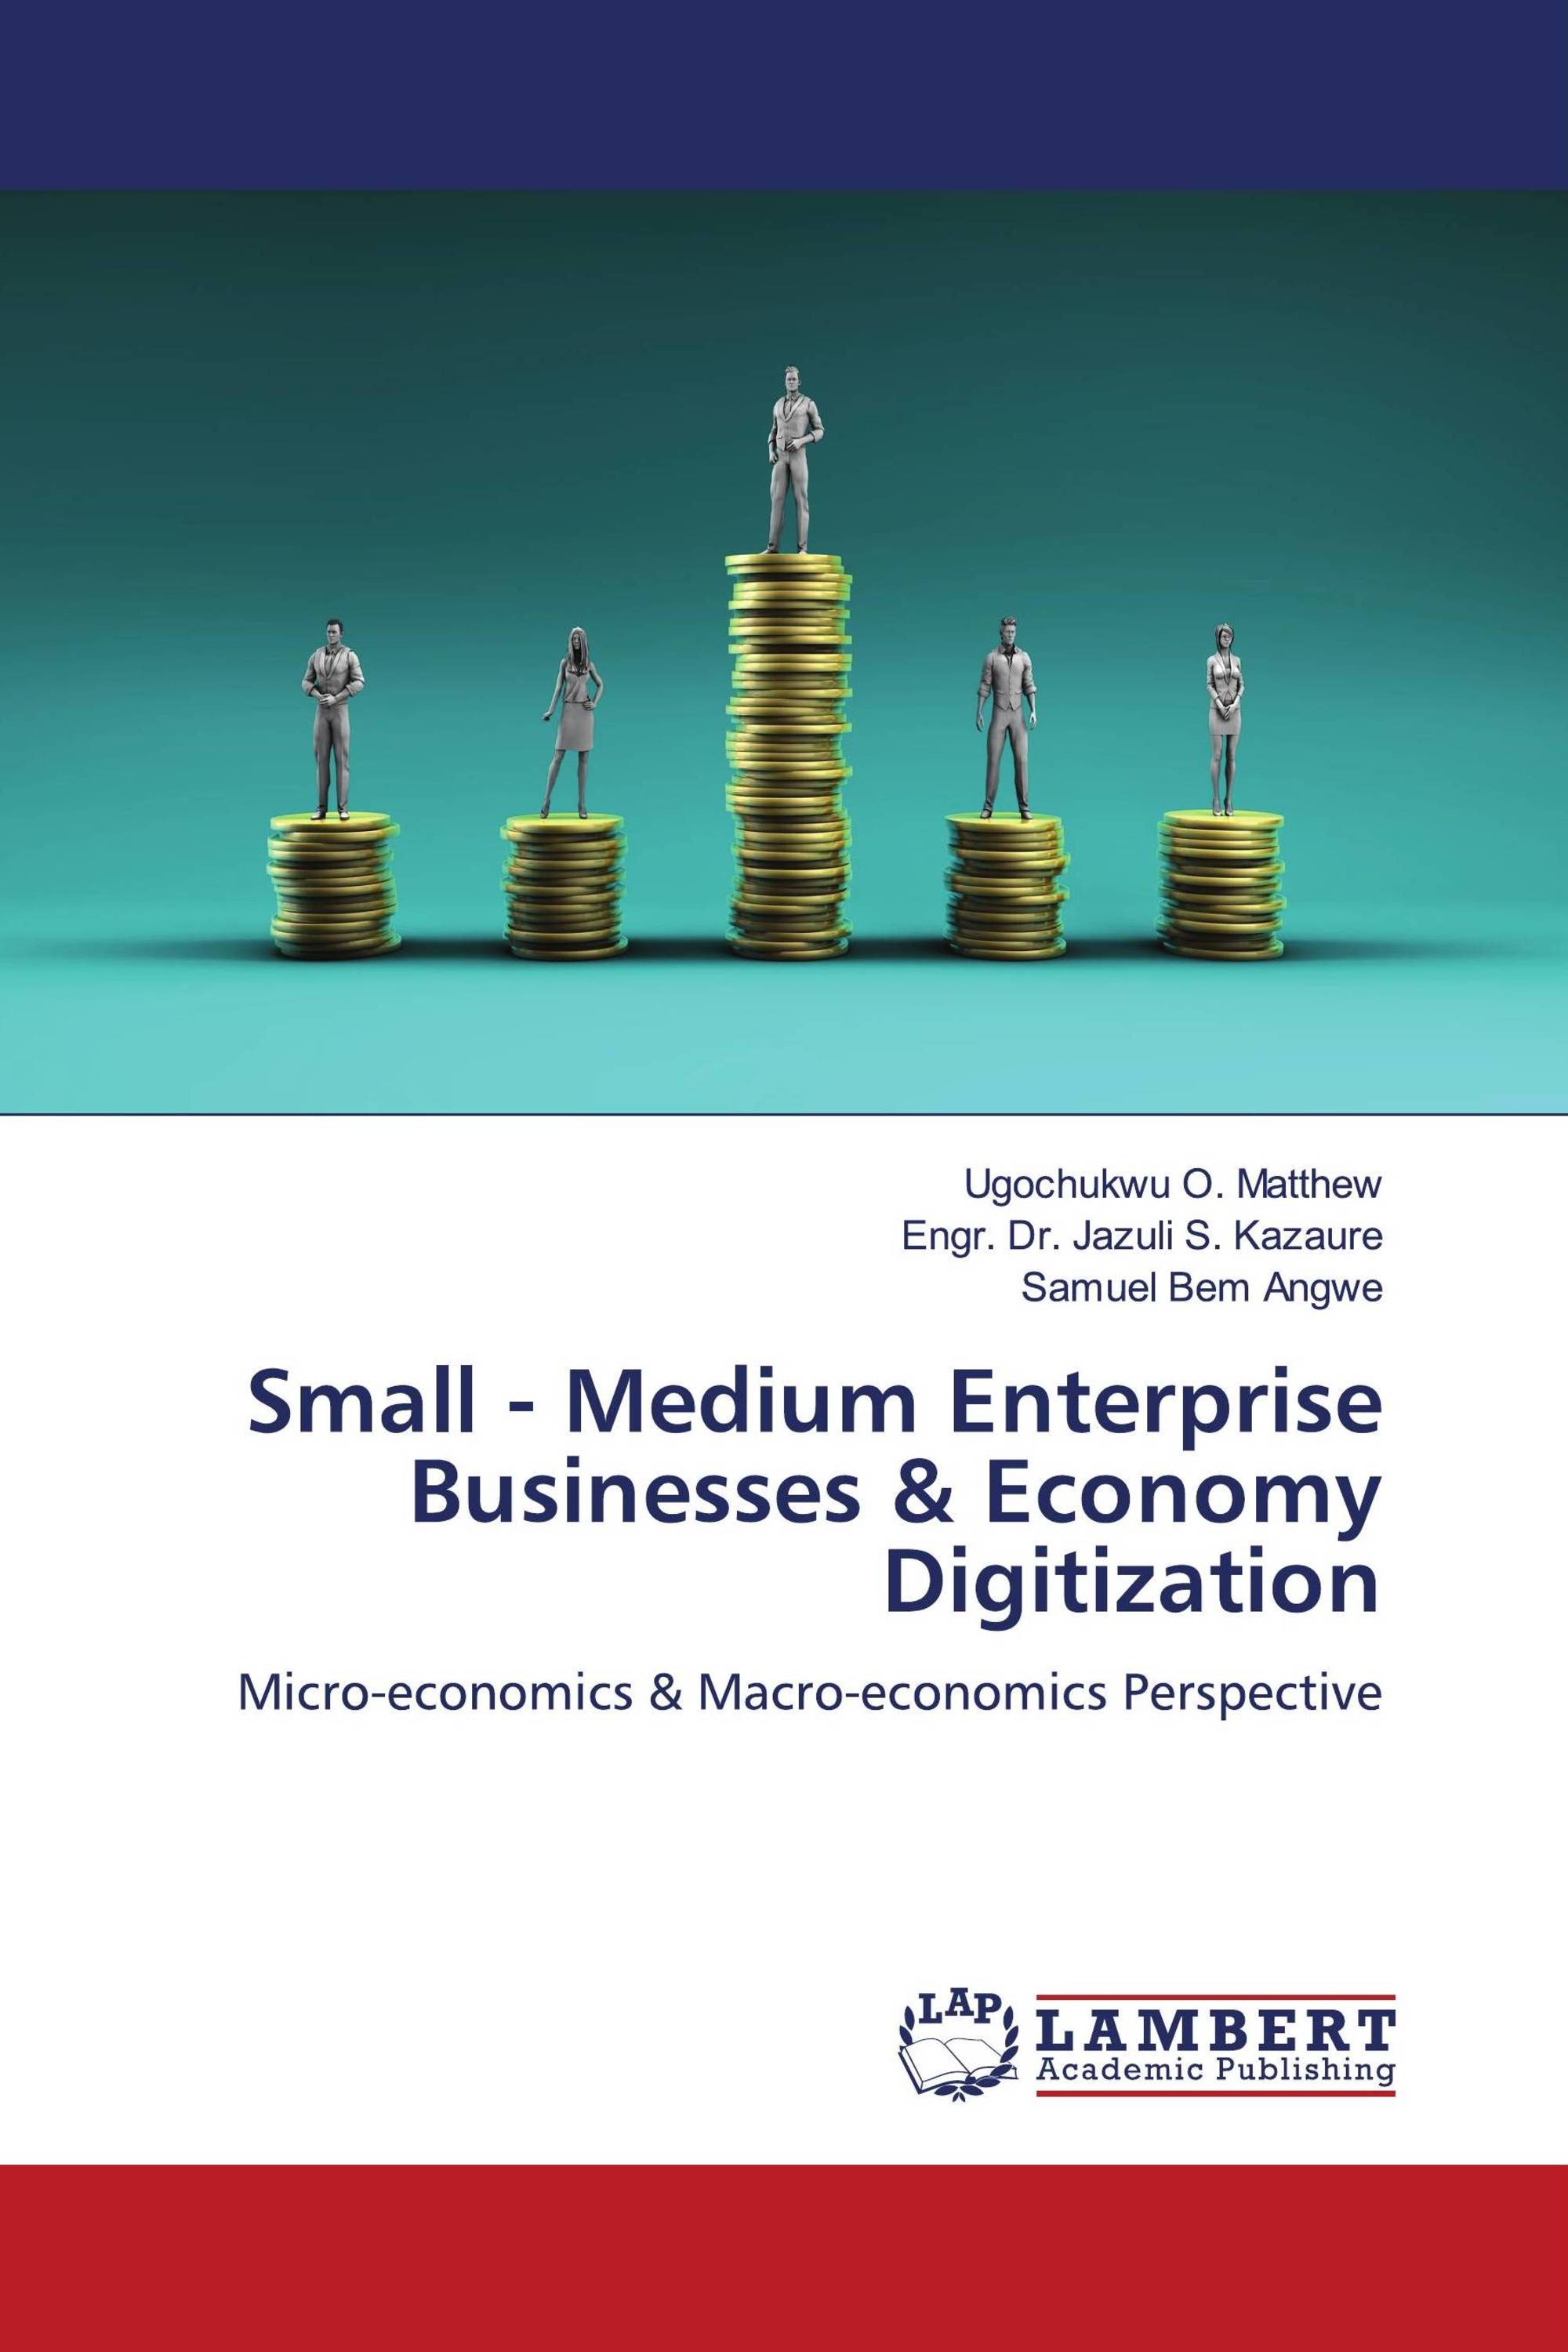 Small - Medium Enterprise Businesses & Economy Digitization